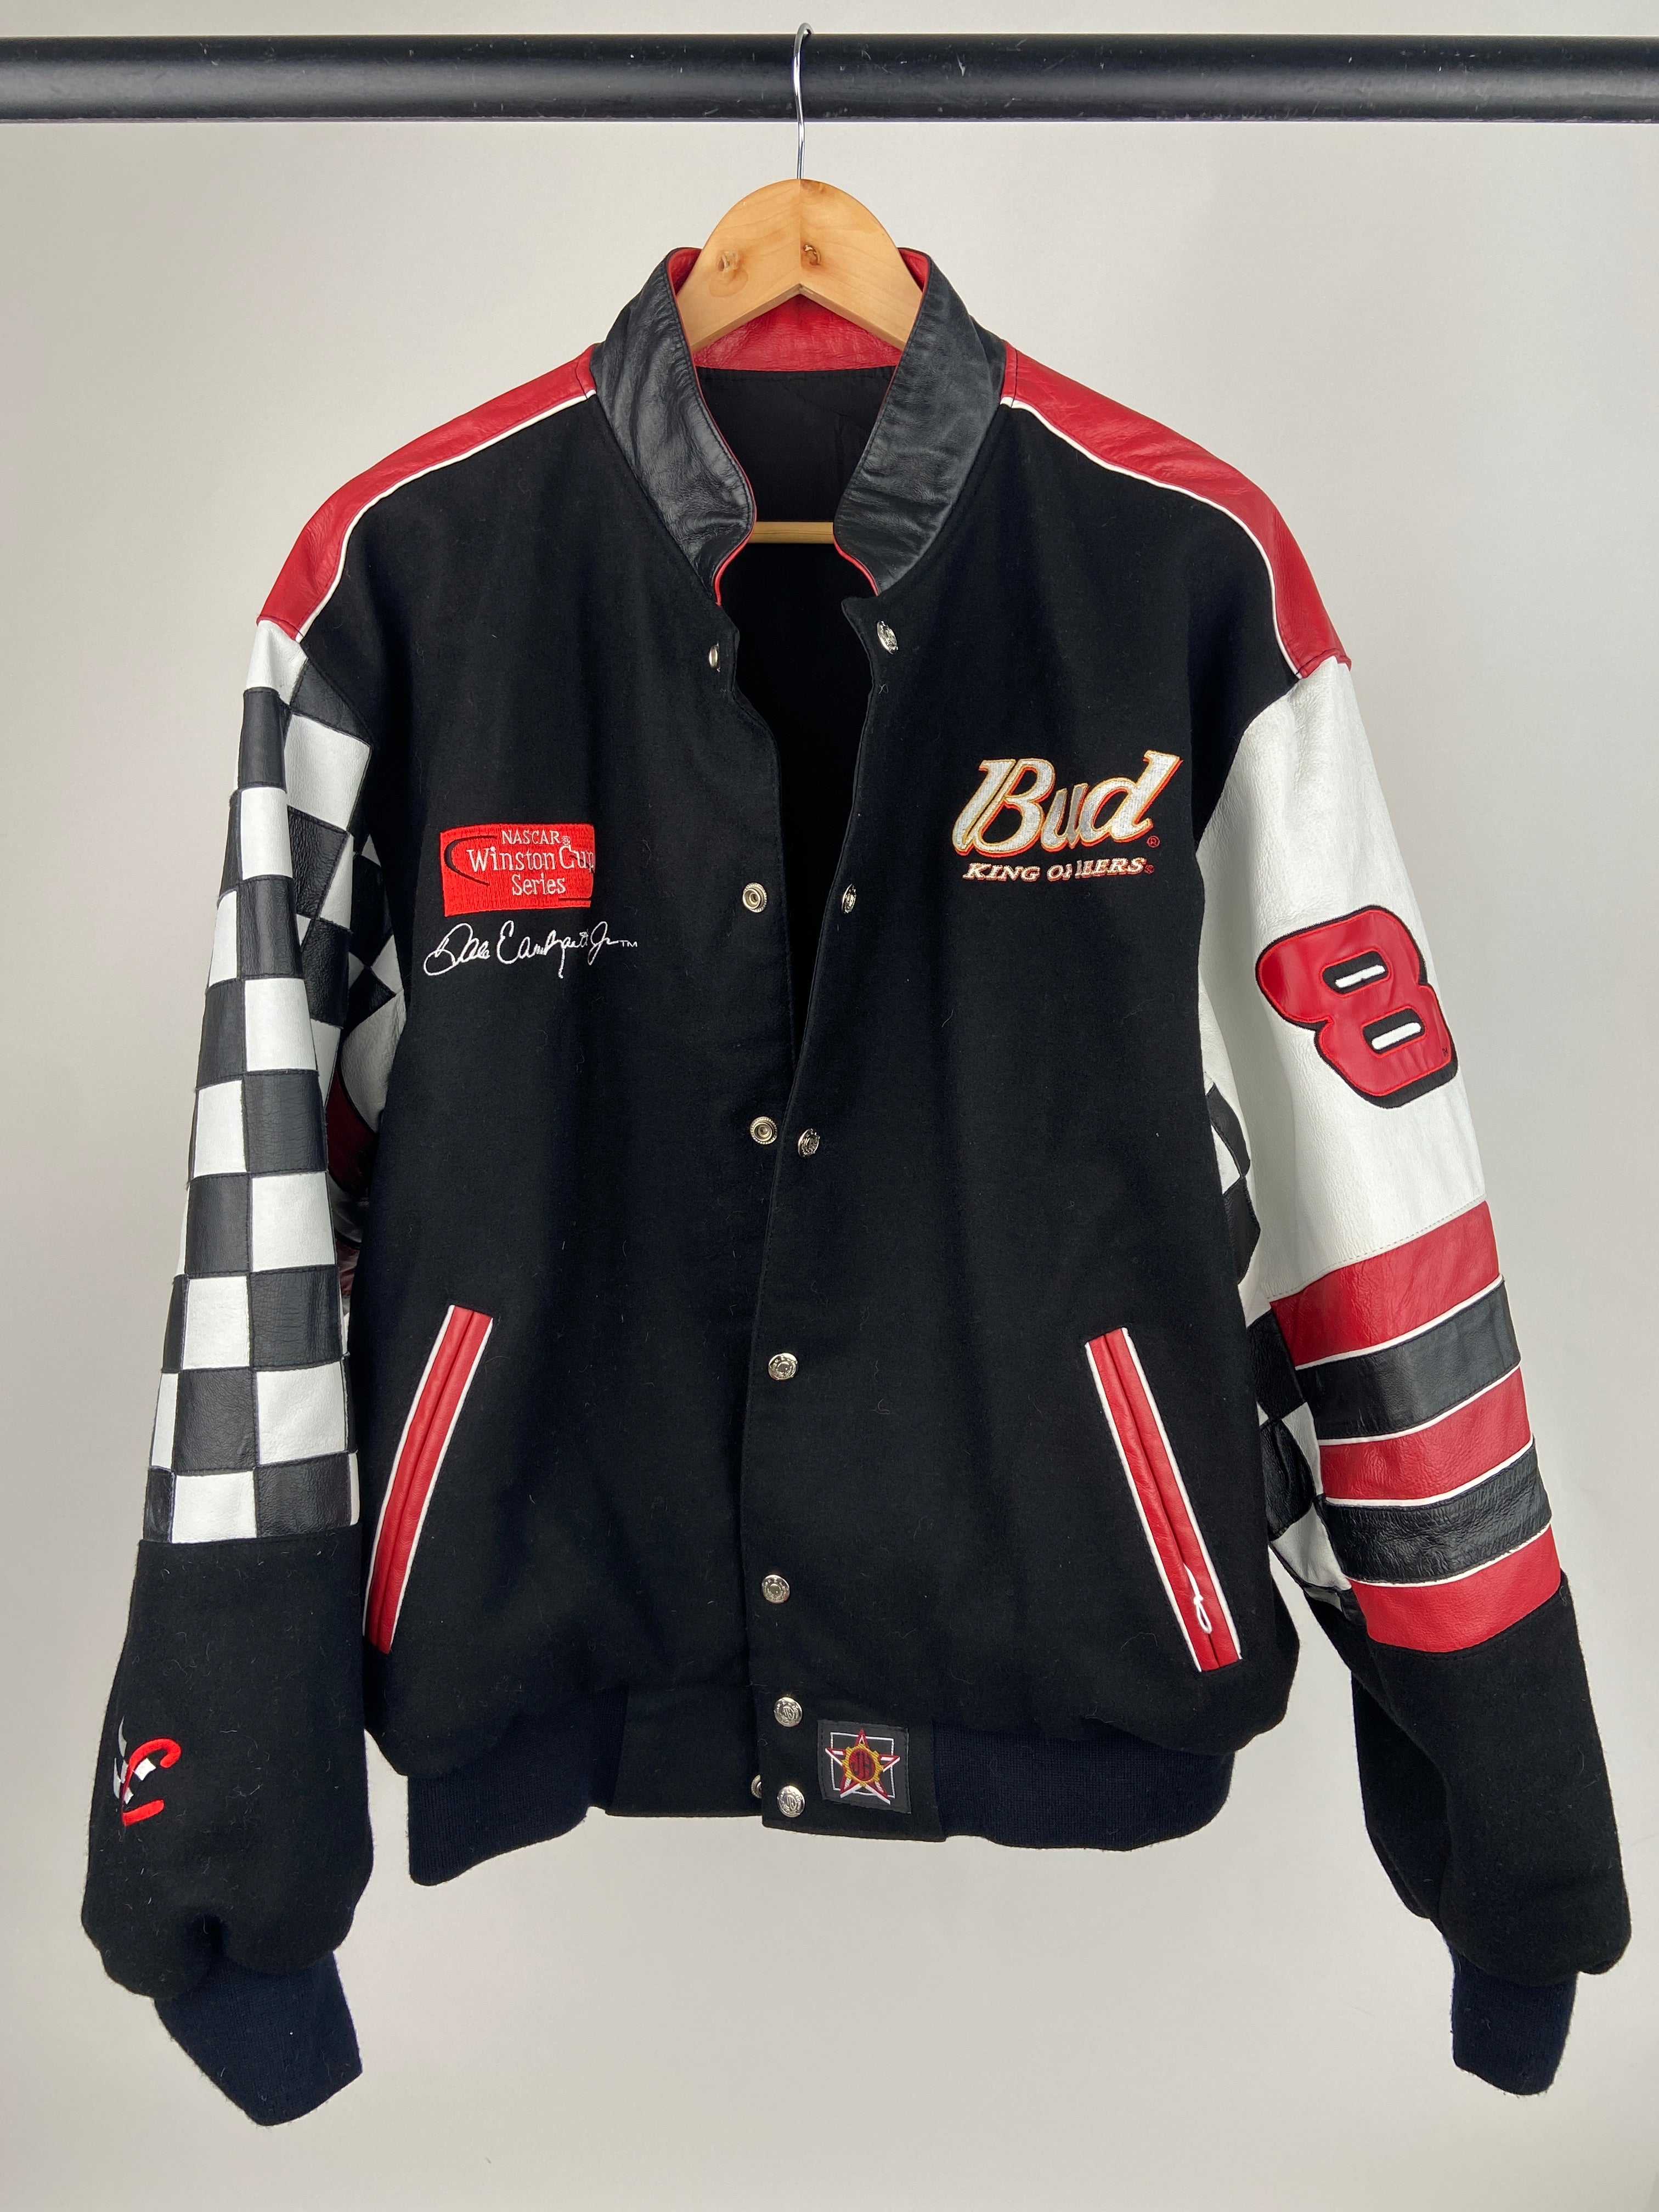 Vintage 90s Budweiser Reversible Leather Bomber Jacket